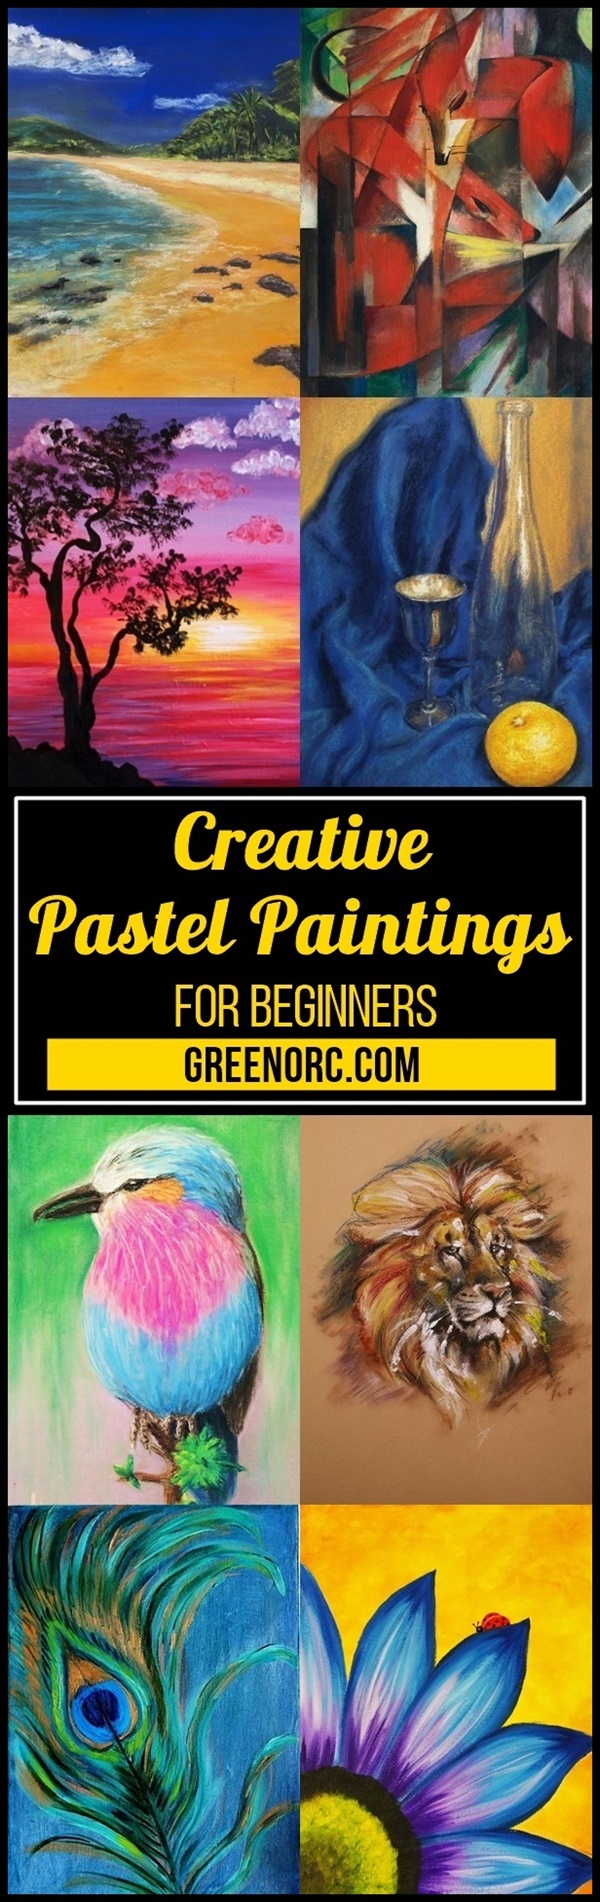 Creative Pastel Paintings for Beginners